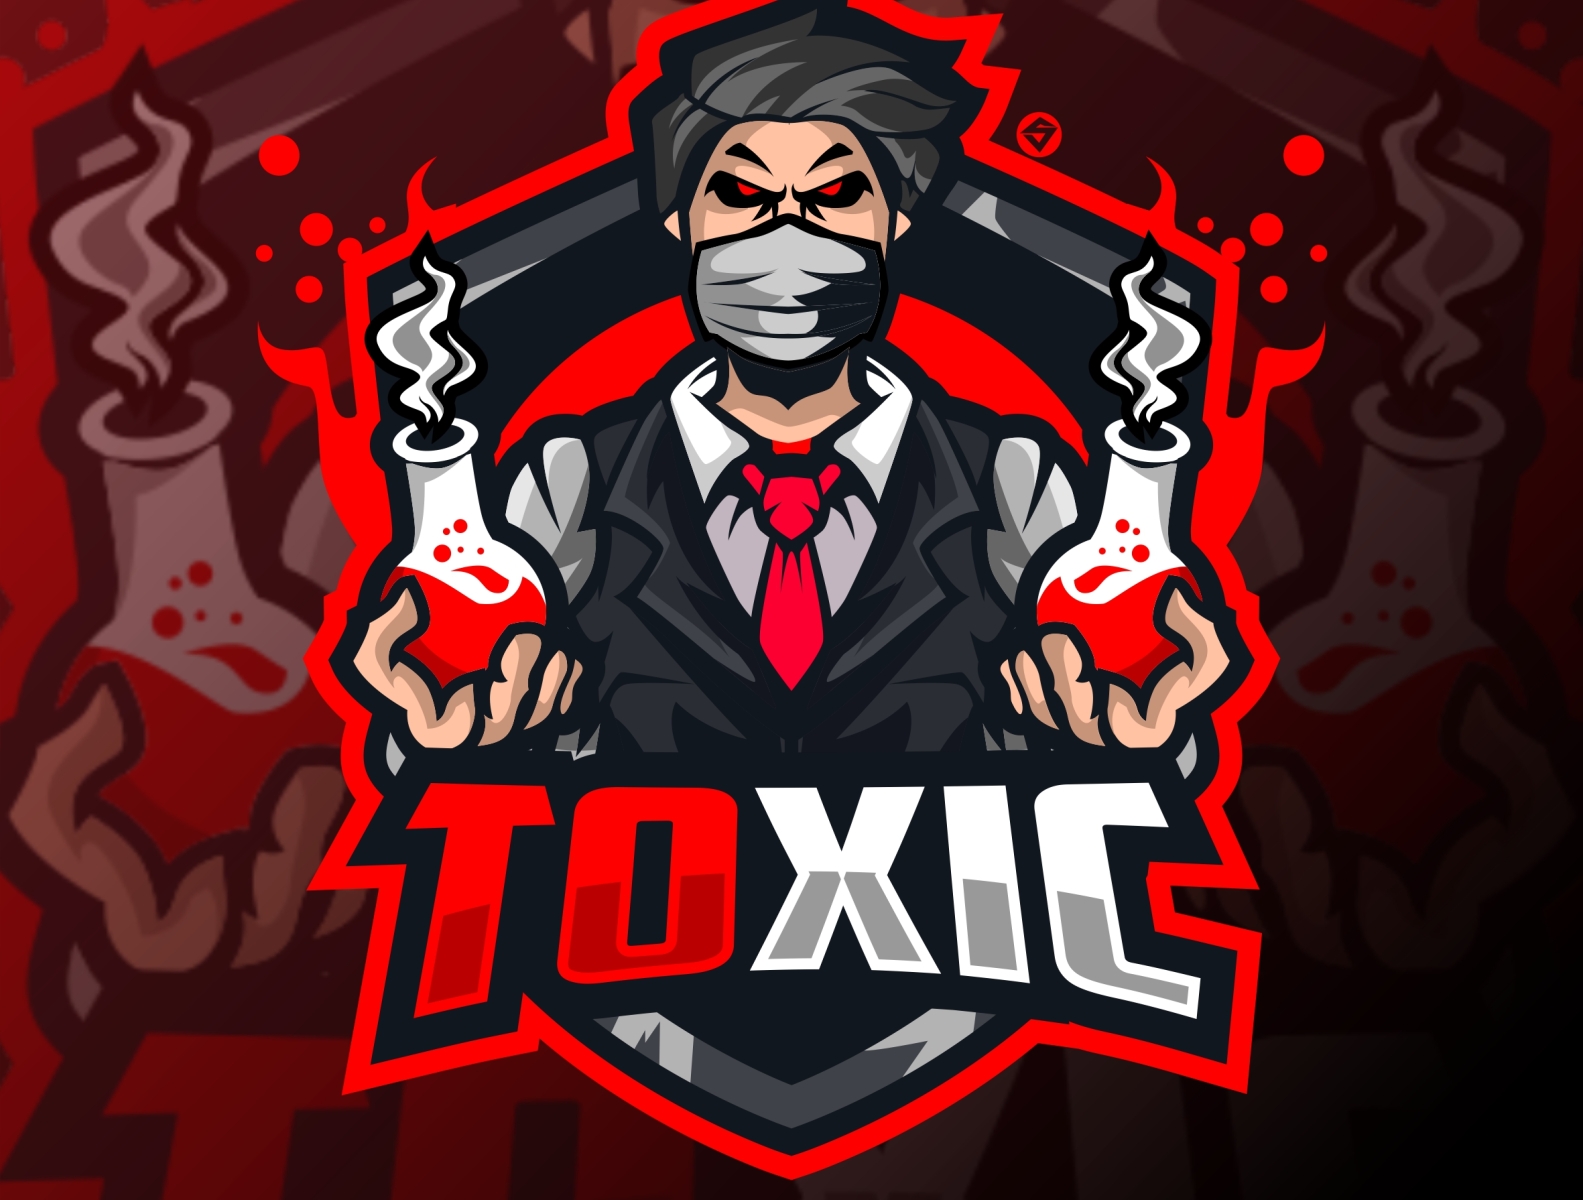 Team Toxic Logo Illustration and Design :: Behance